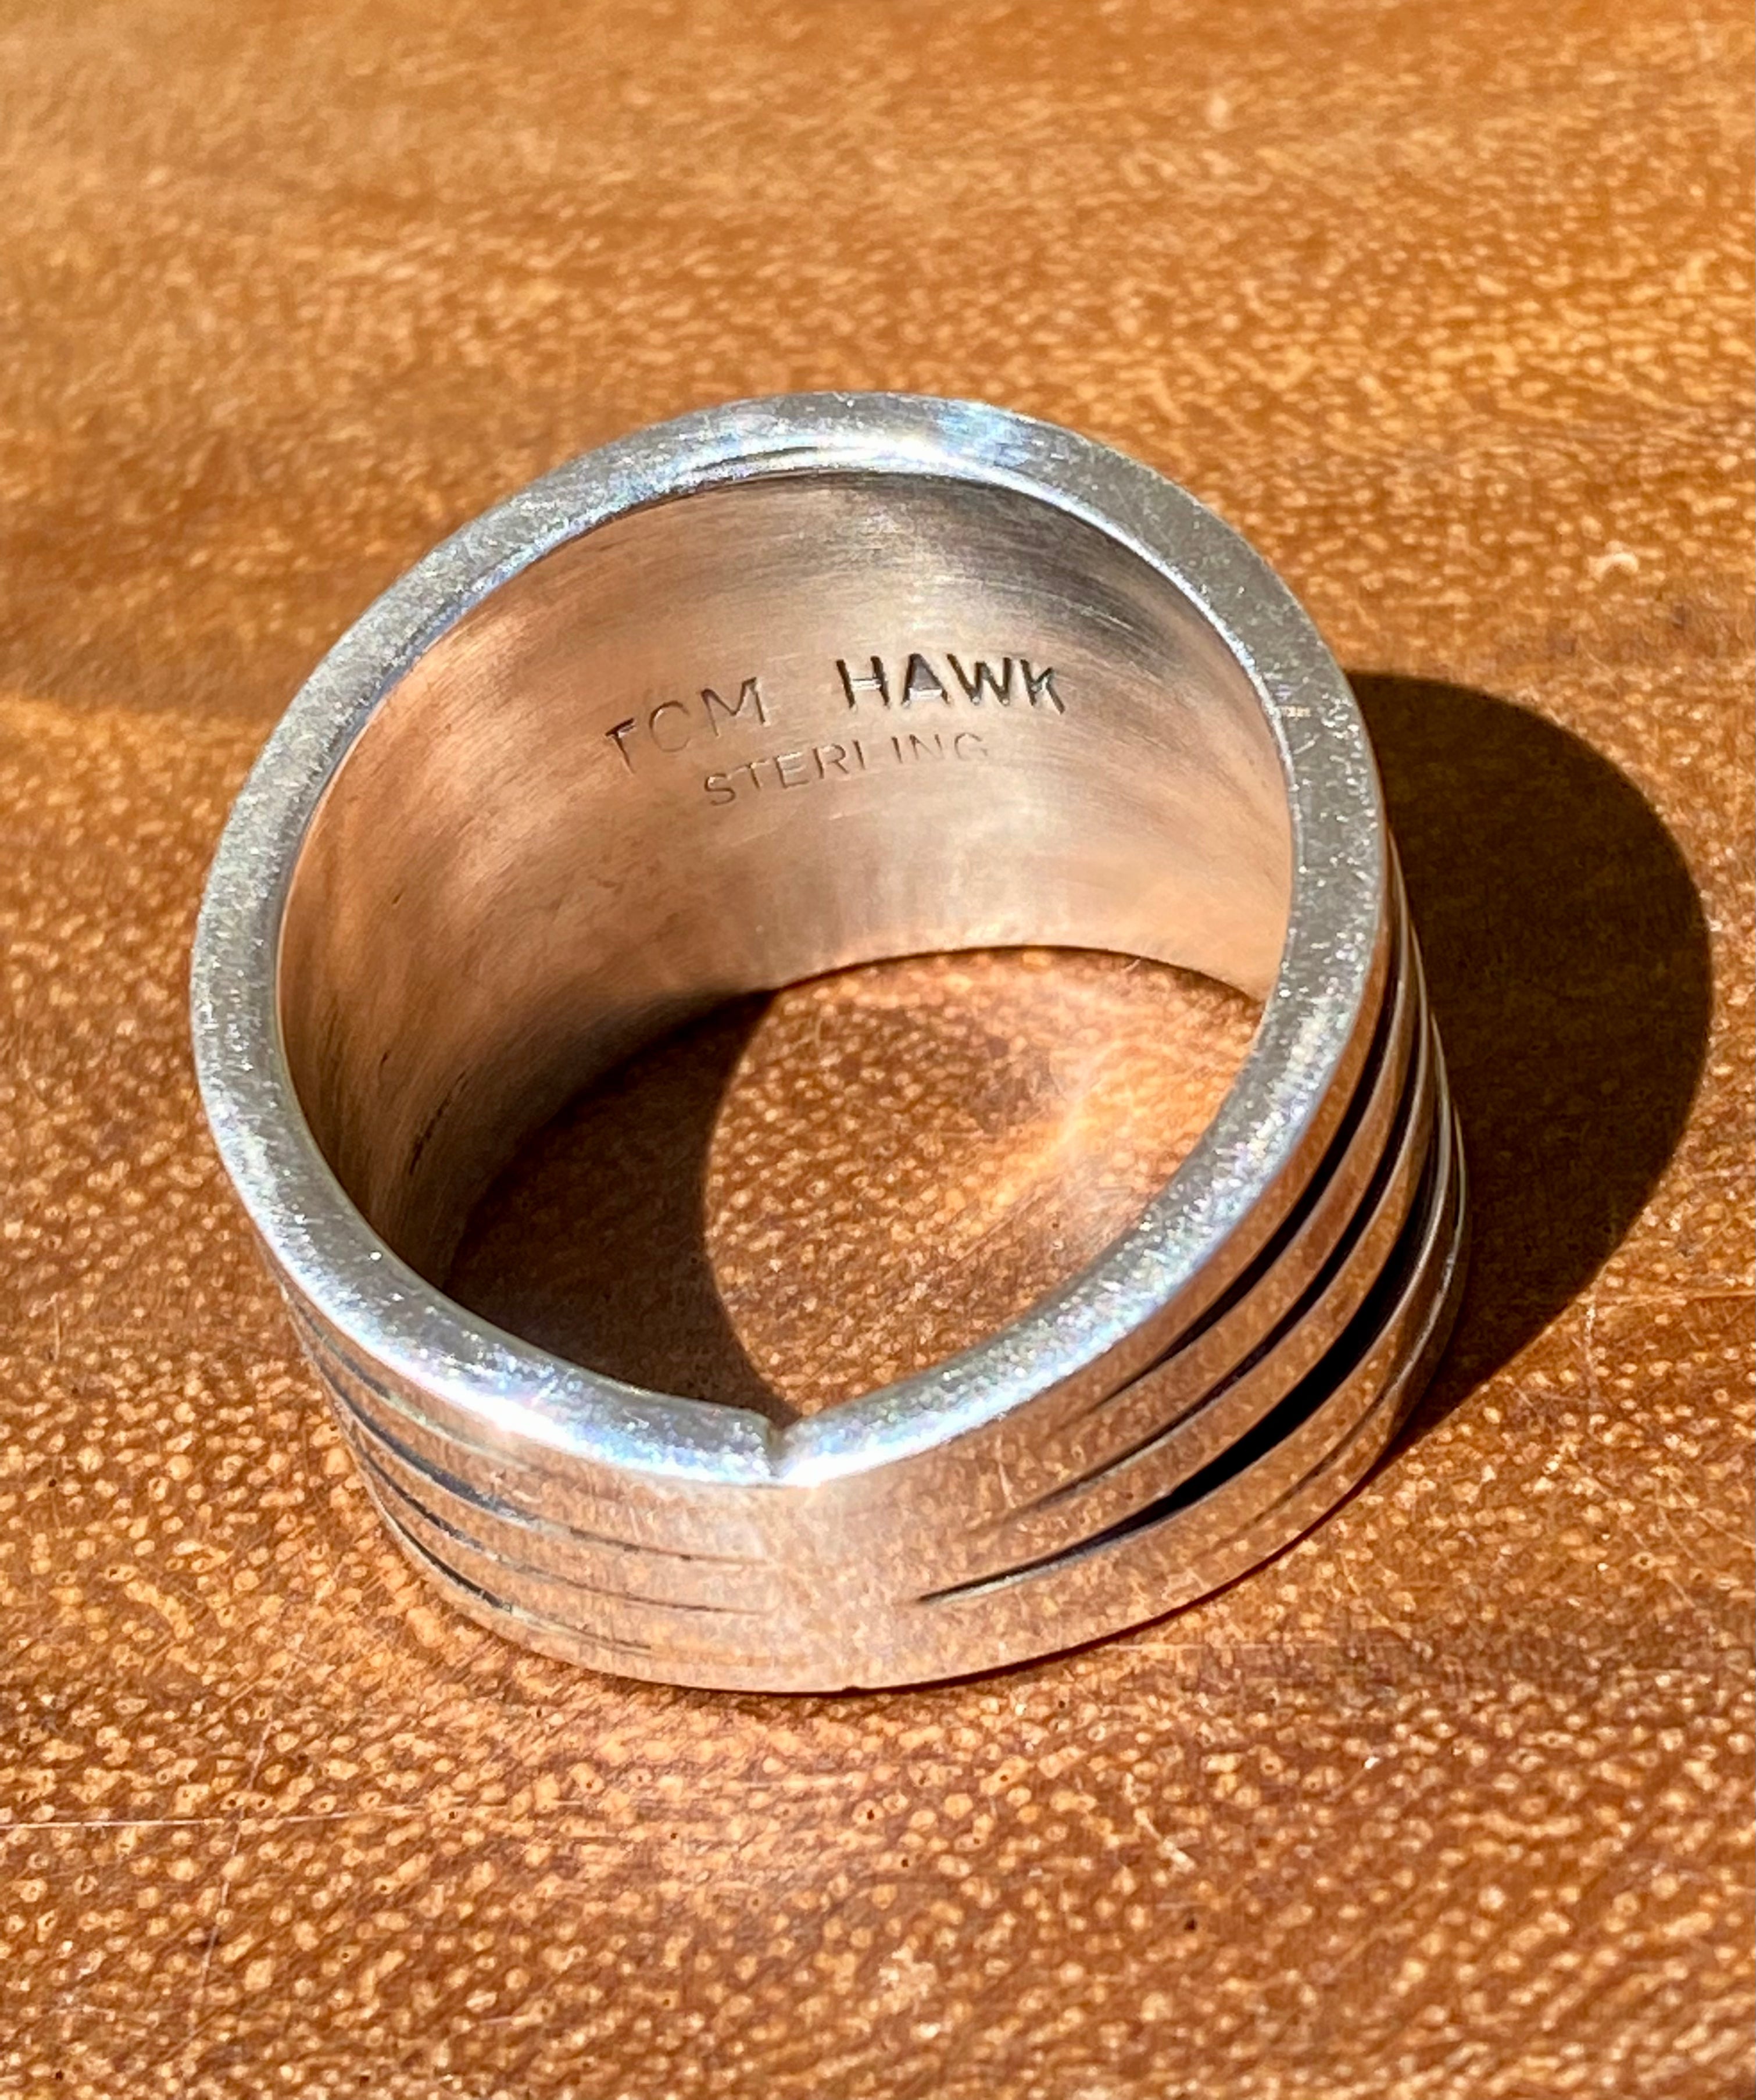 Tom Hawk Sterling Silver Ring Size 13